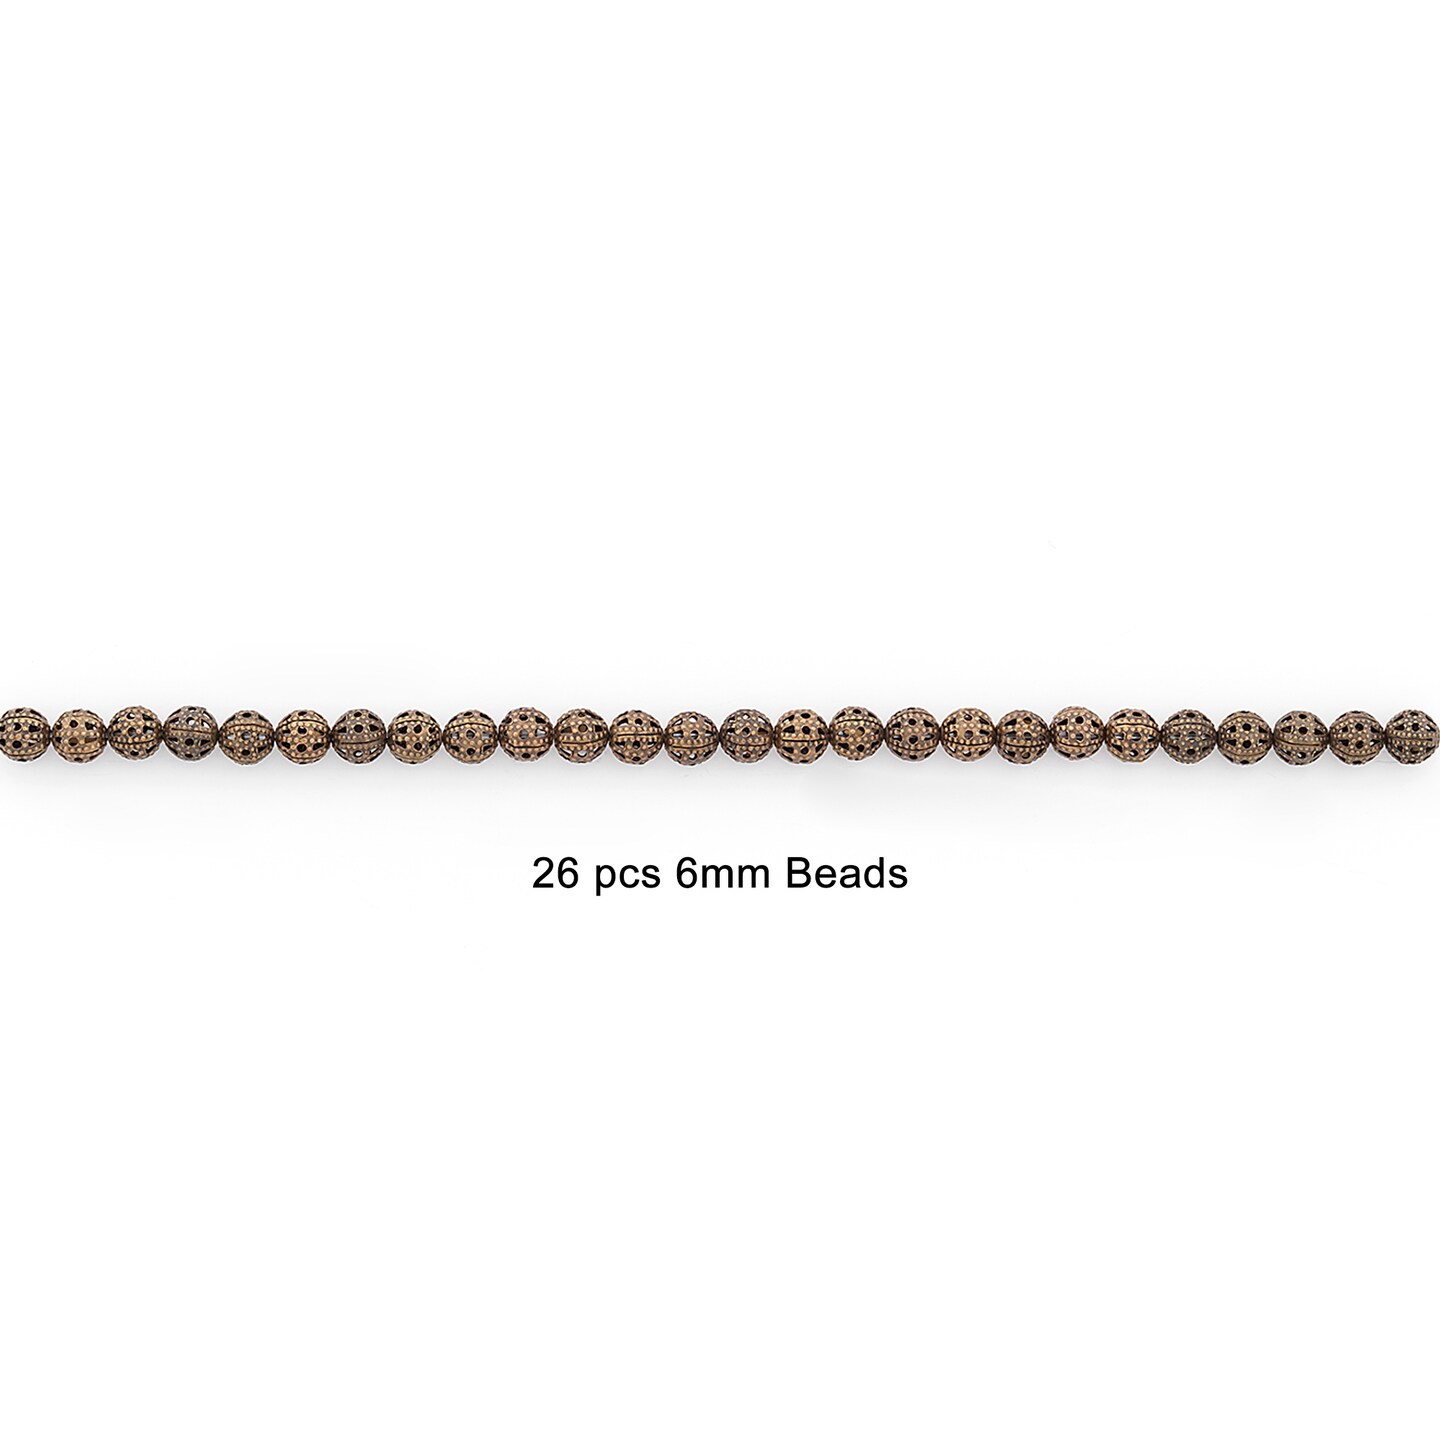 Filigree Metal 6mm round Beads Pack of 26 - Antique Bronze